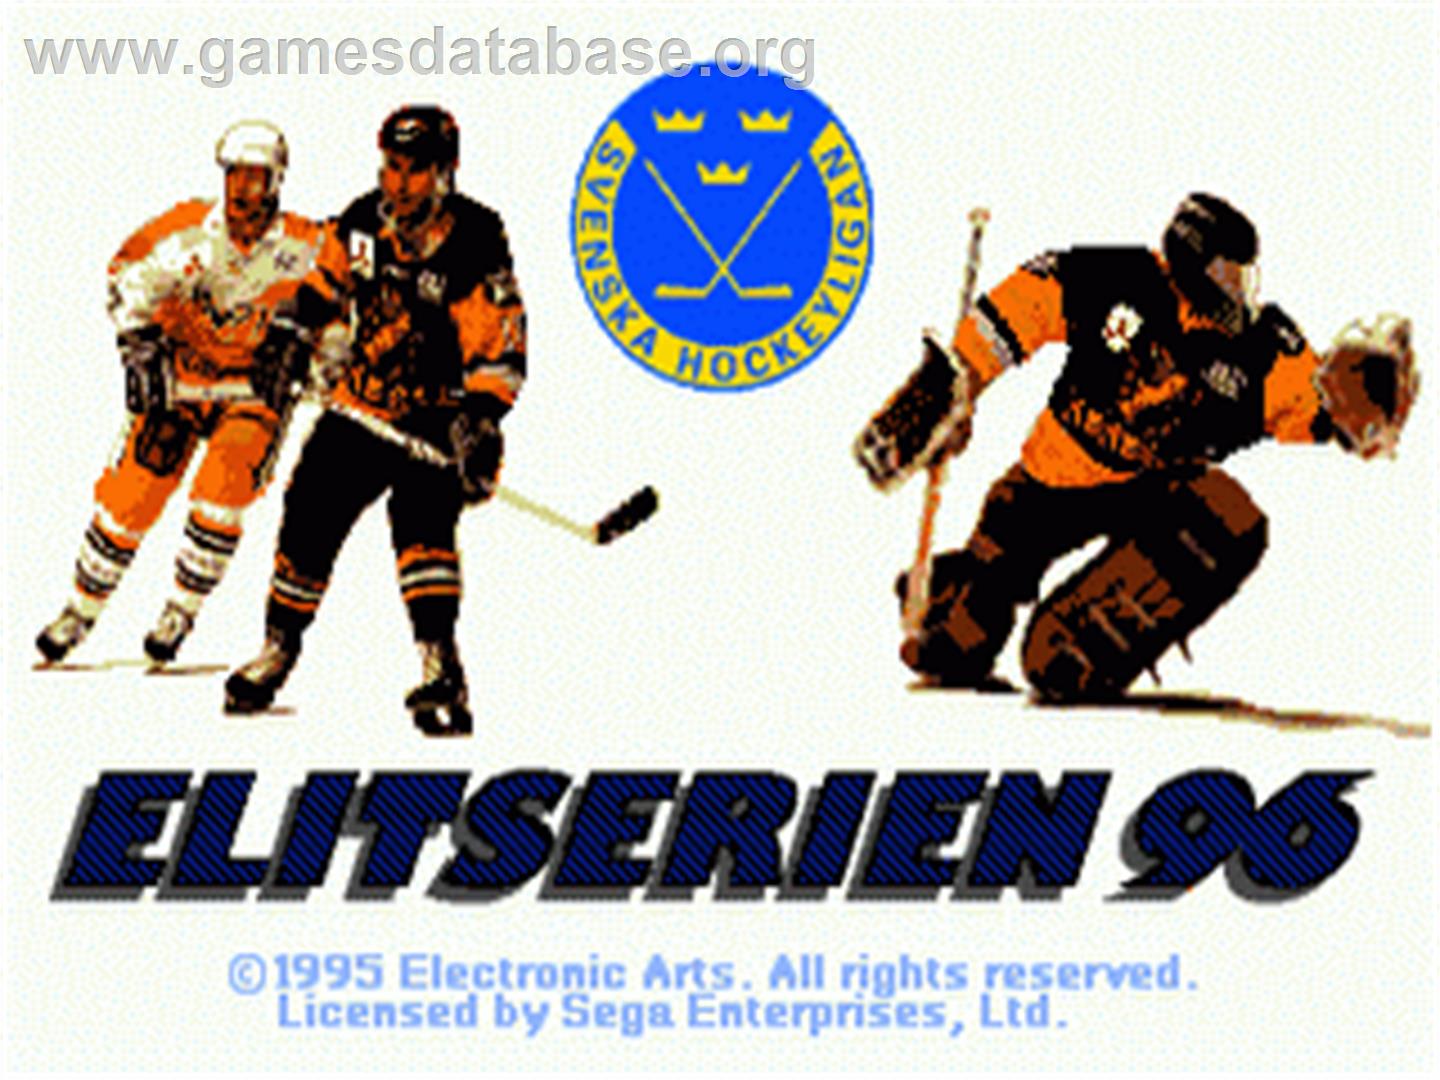 Elitserien 96 - Sega Genesis - Artwork - Title Screen